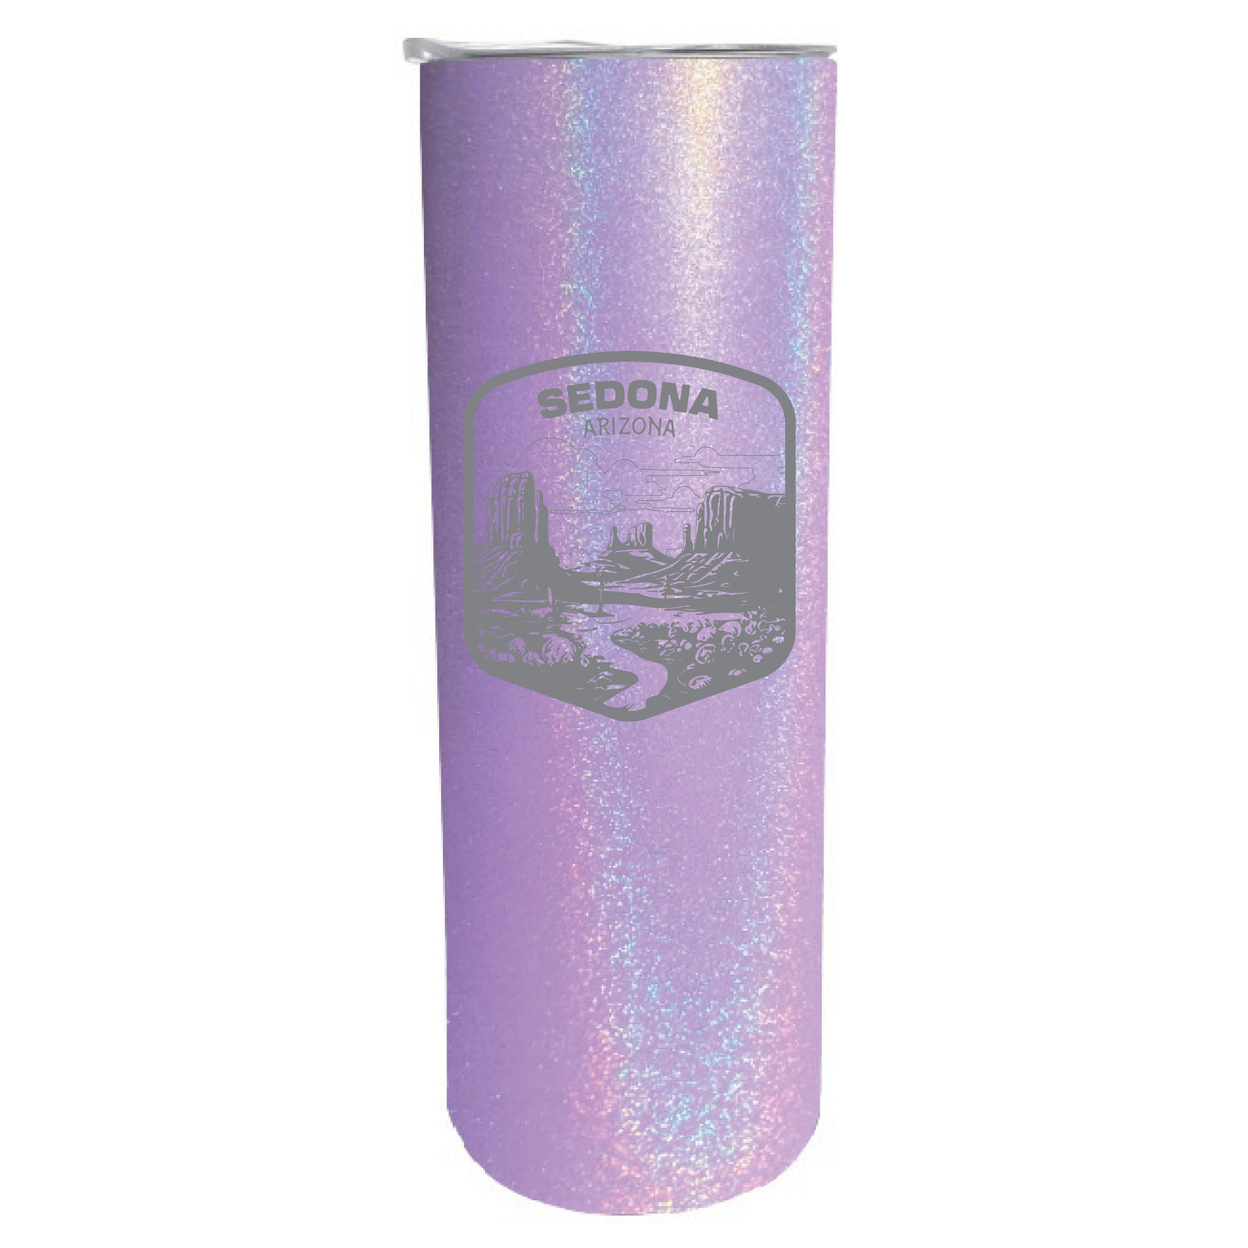 Sedona Arizona Souvenir 20 Oz Engraved Insulated Stainless Steel Skinny Tumbler - Purple Glitter,,2-Pack